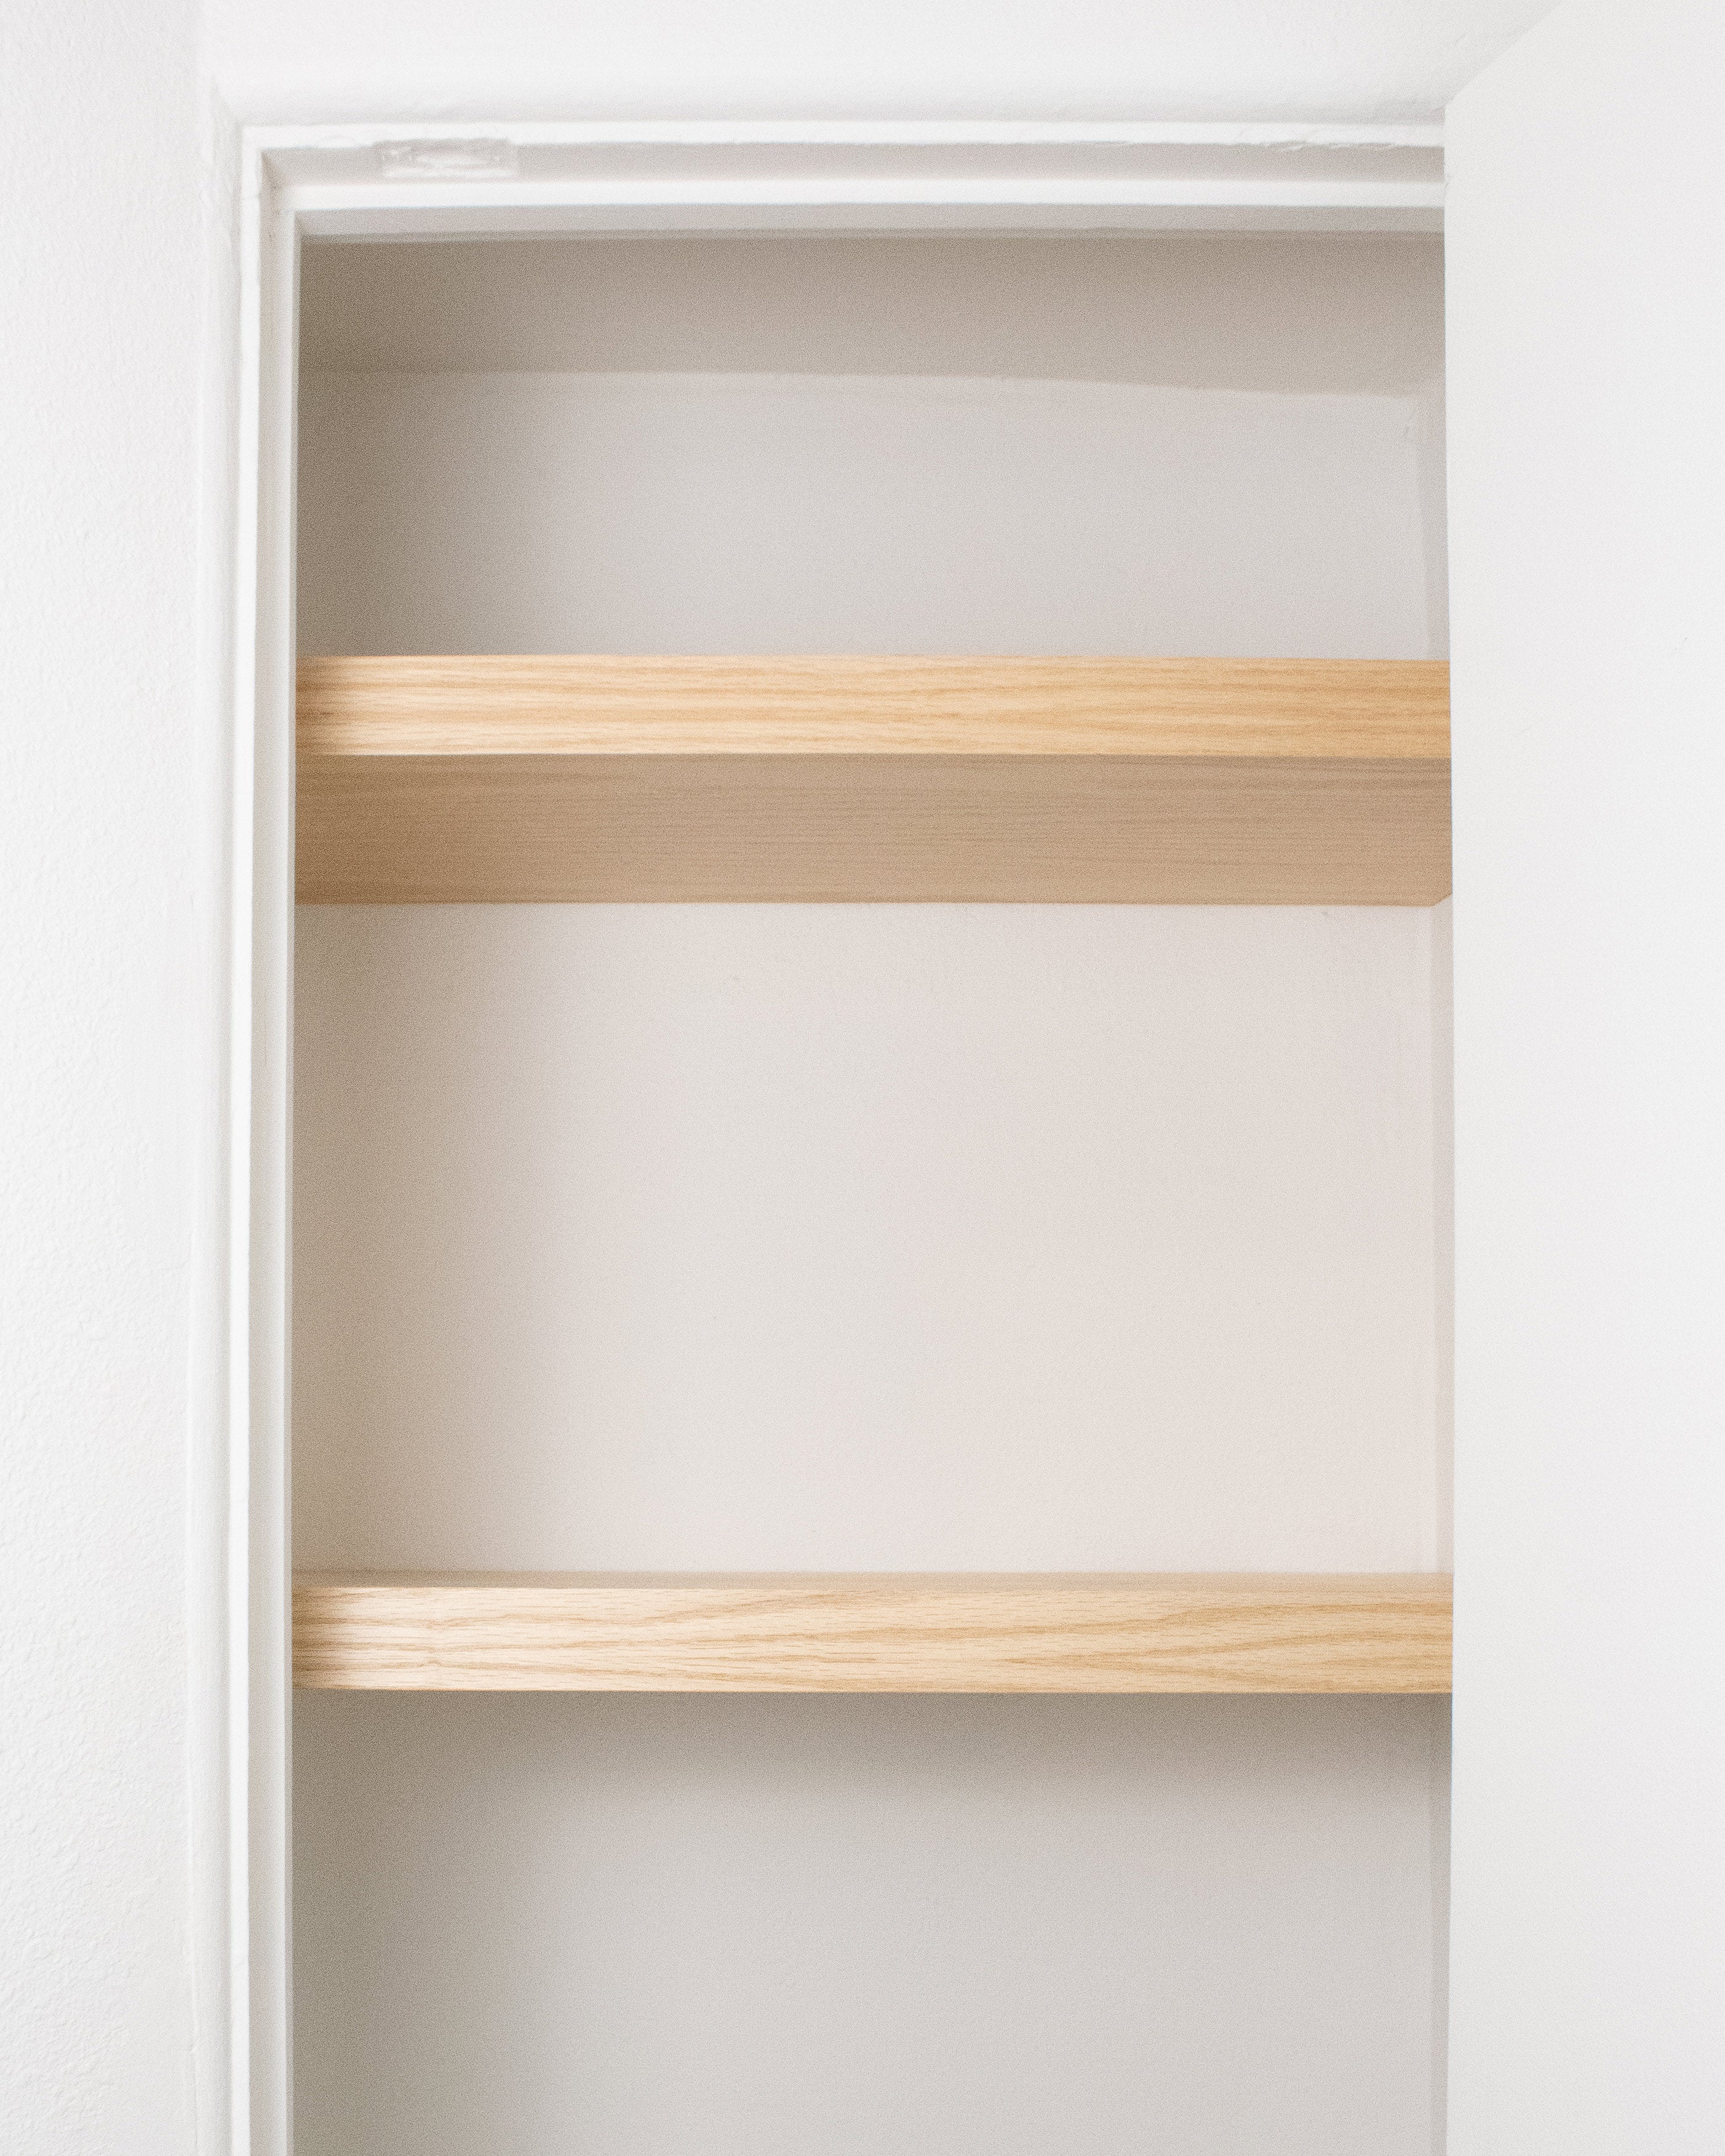 Ash 4-6" thick Cabinet Top / Slab Shelf